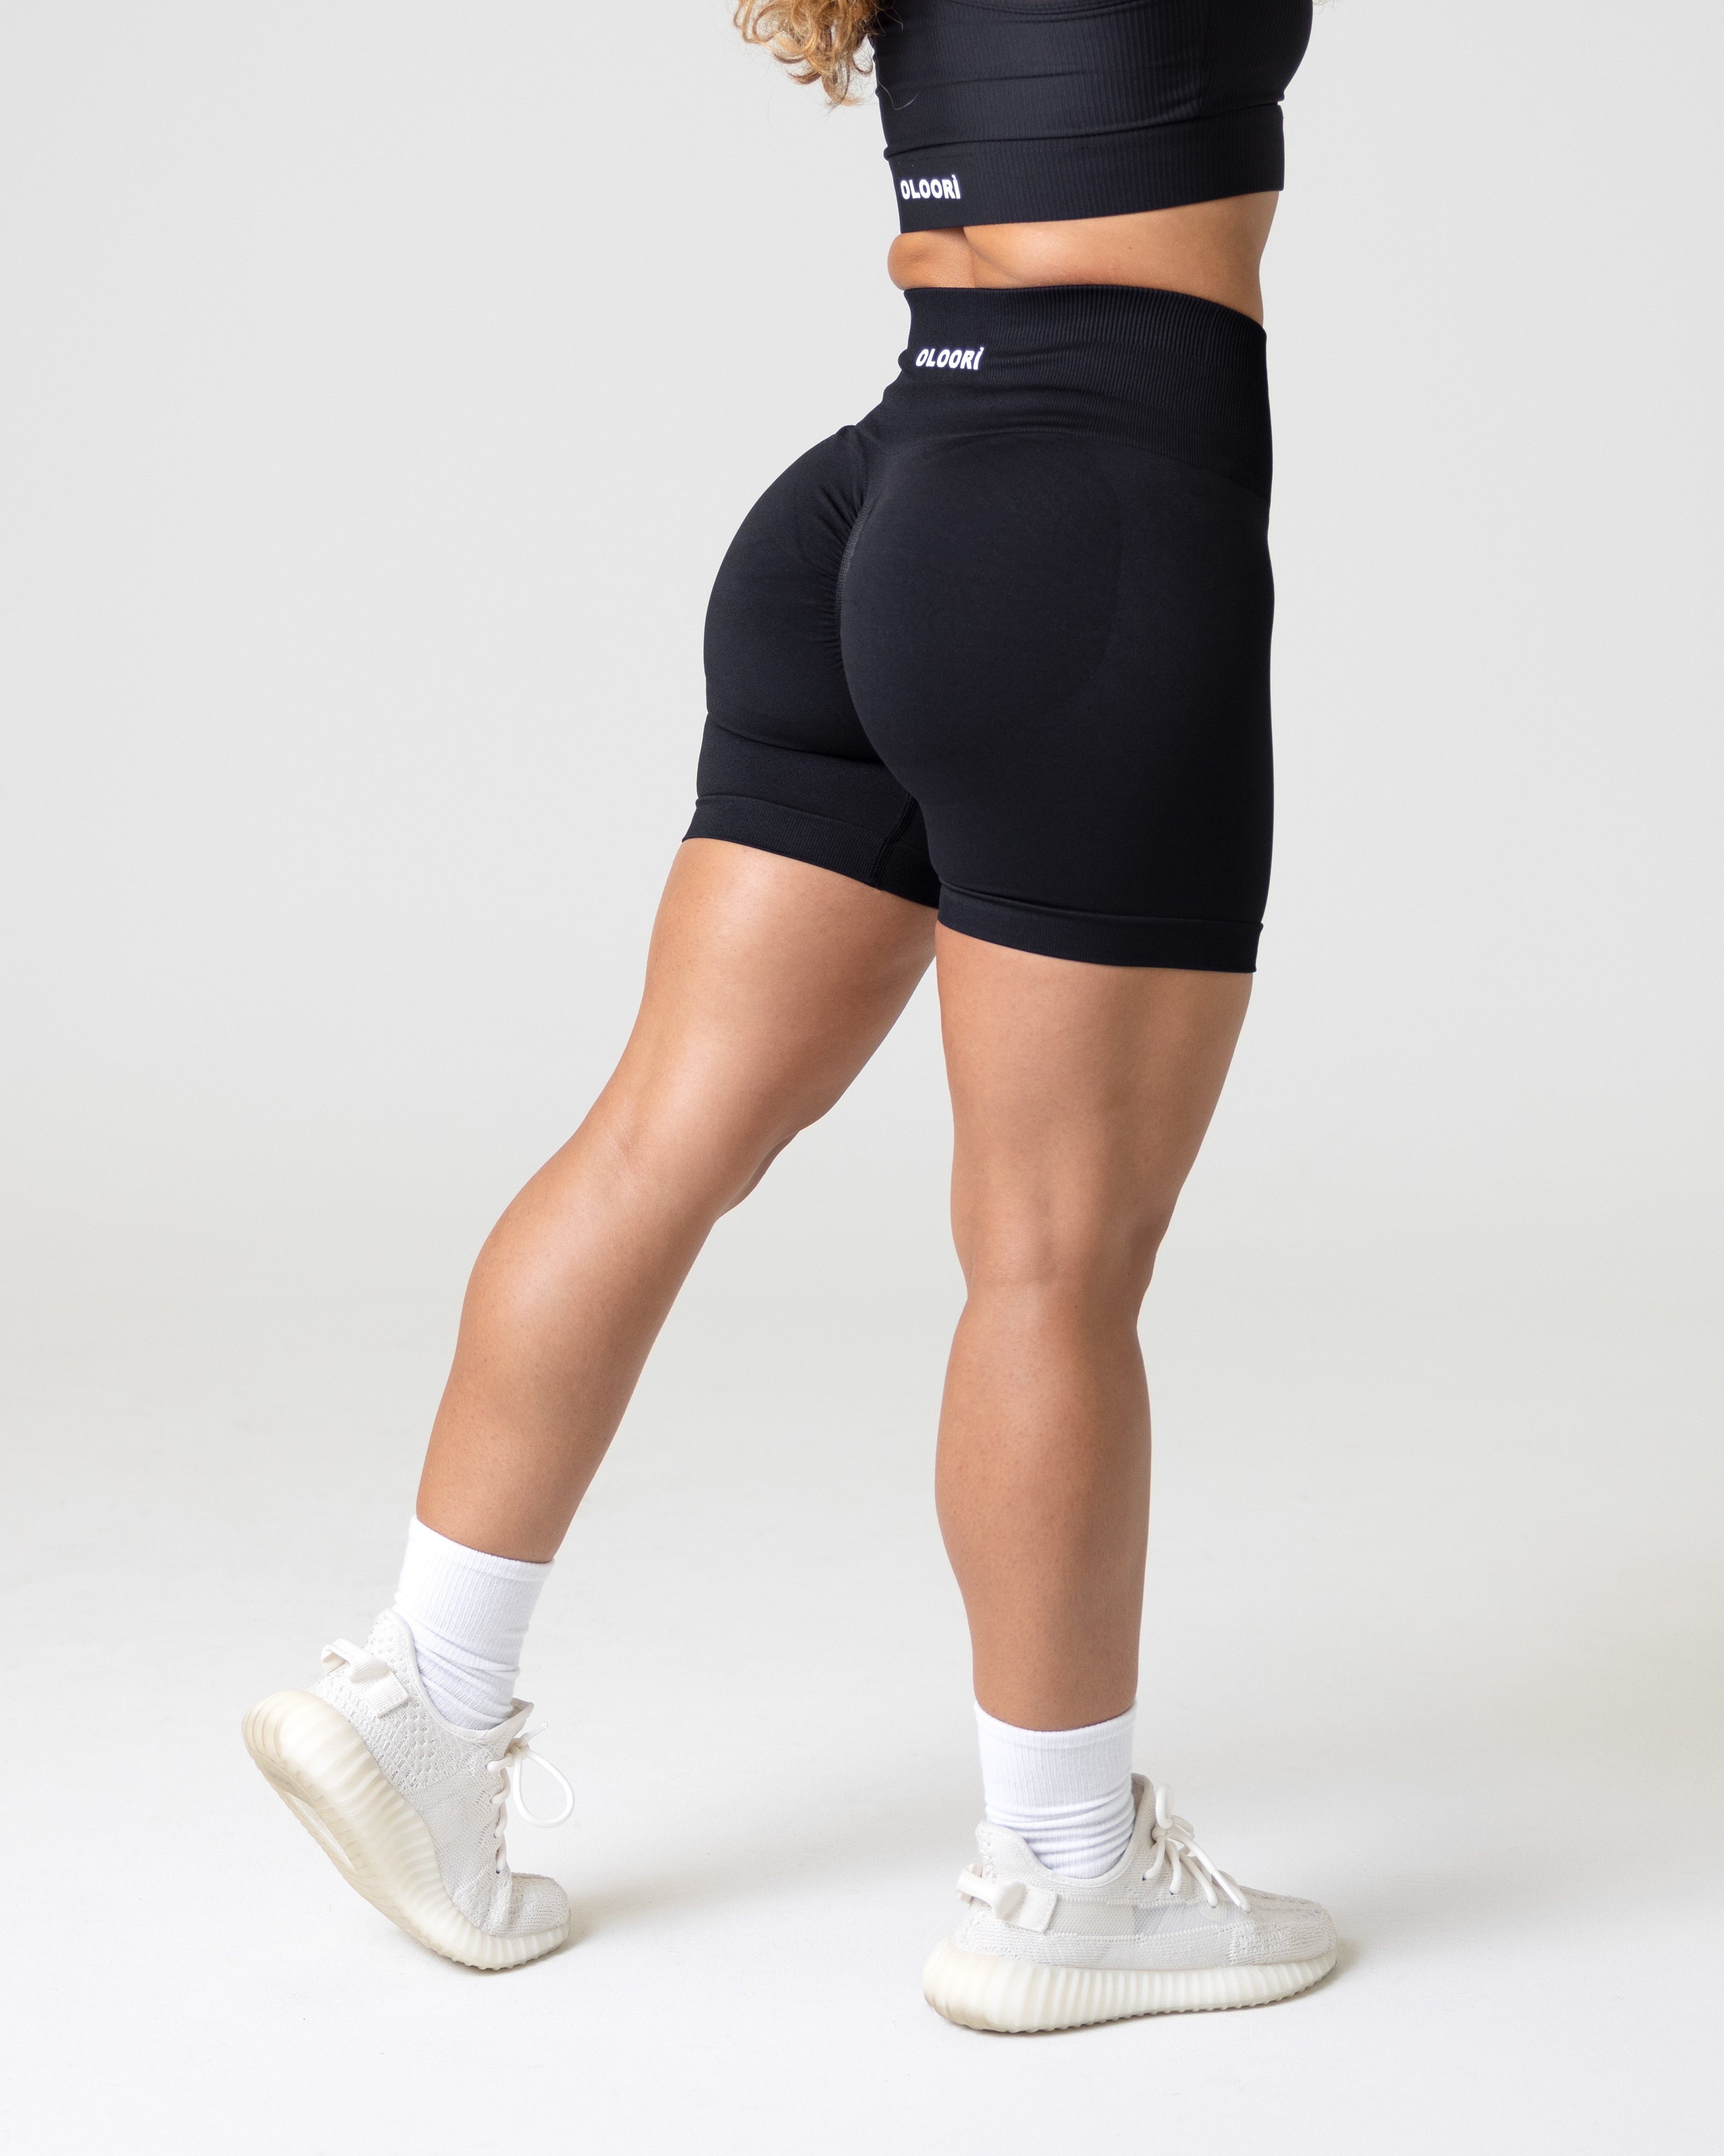 Women's Yoga Elastic Waist Running Athletic Shorts Drawstring Dolphin  Shorts with Pockets Soft Comfy Short Pants